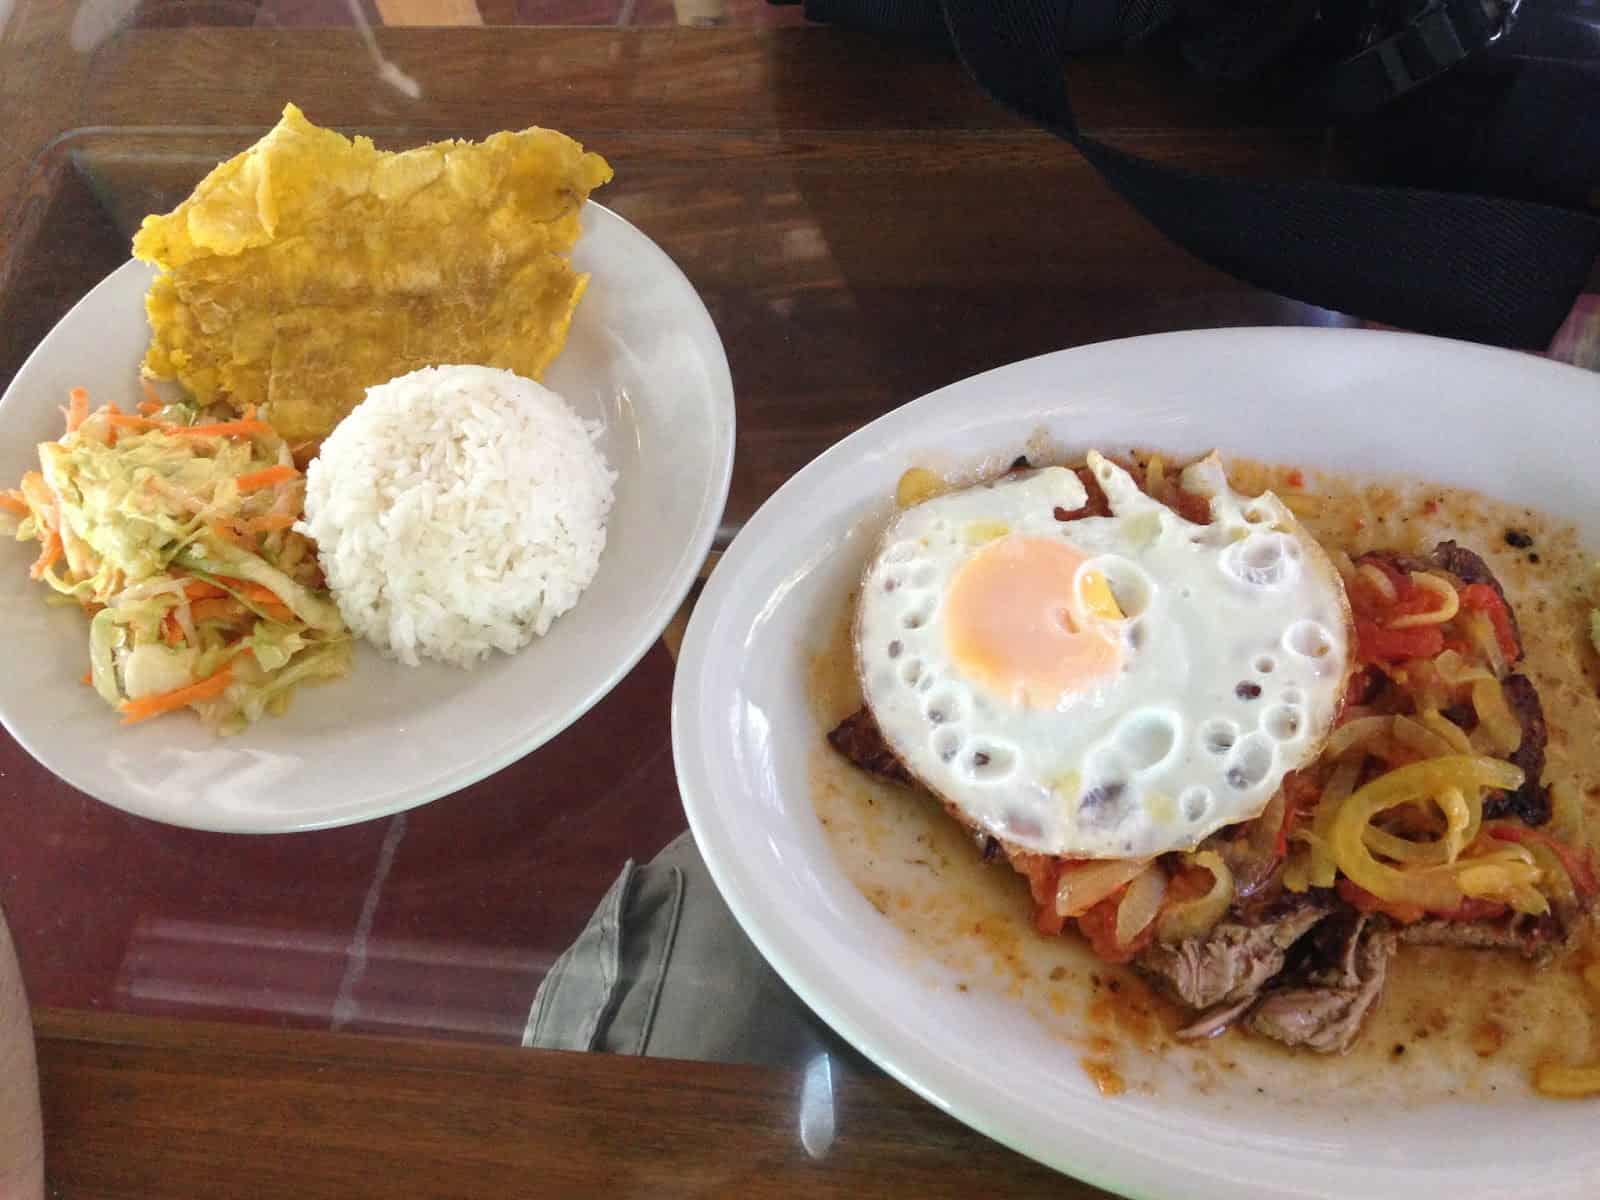 My meal at Parador Grajales